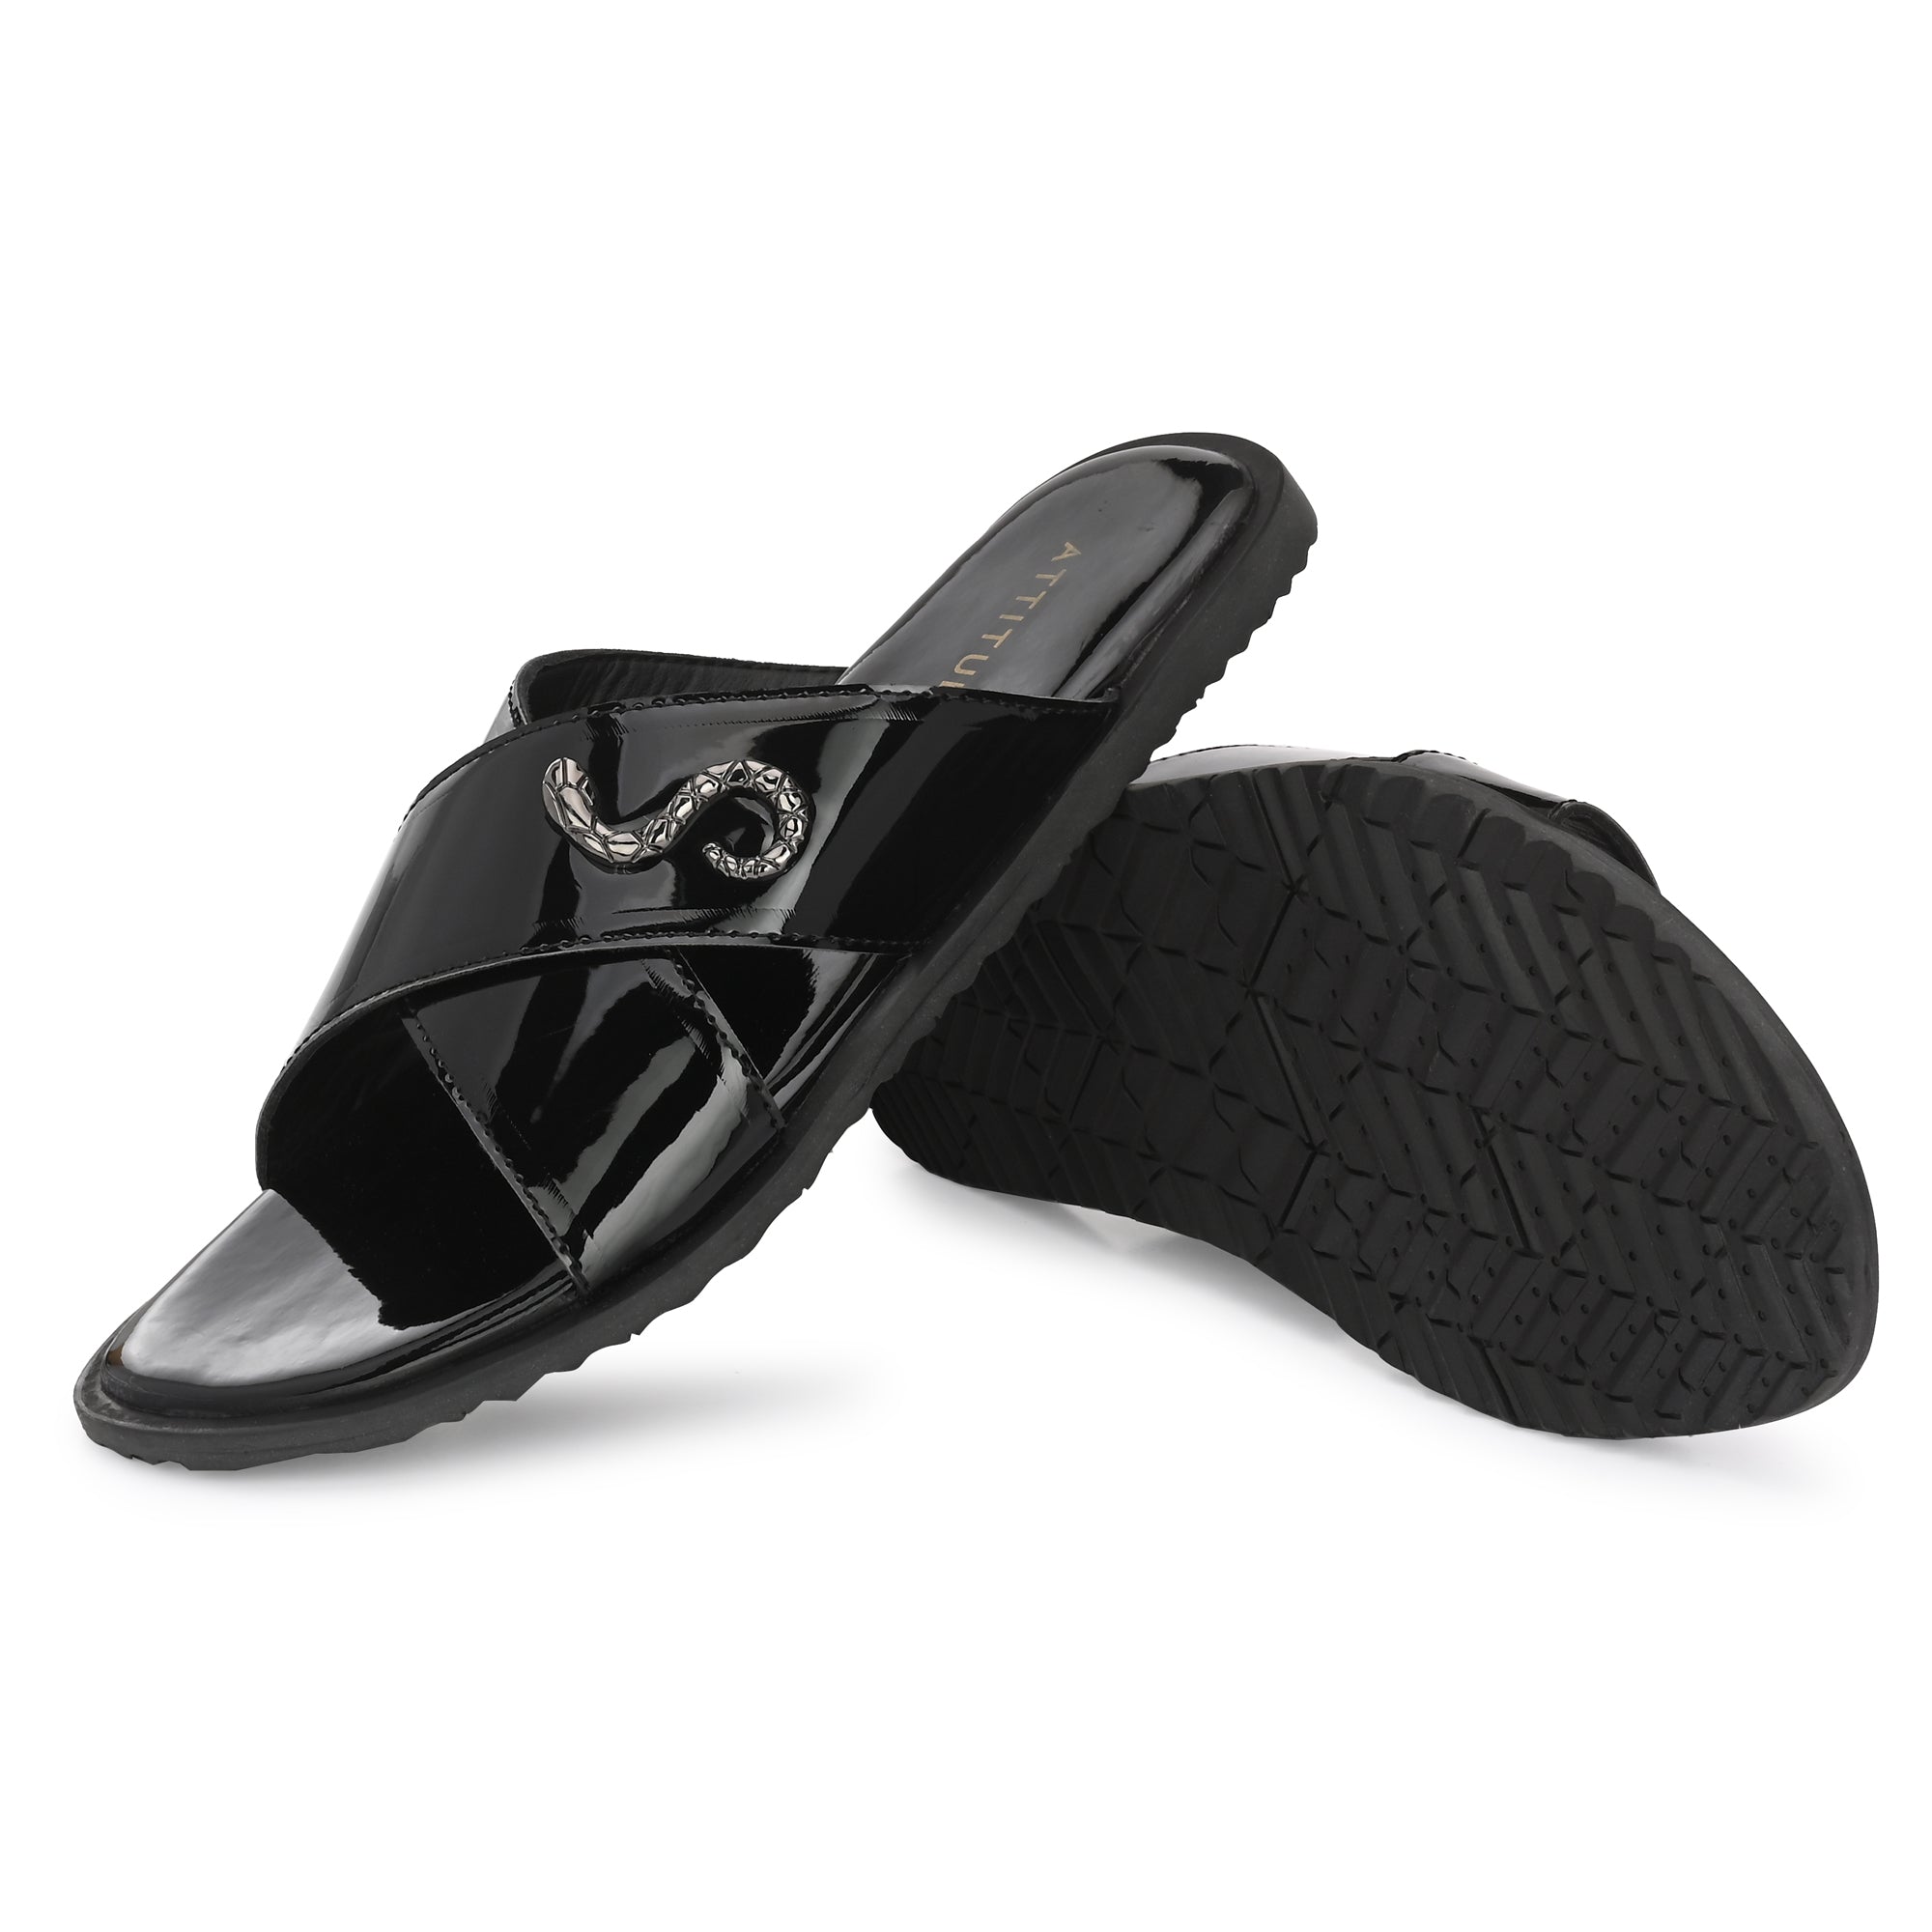 attitudist-glossy-black-cross-over-slippers-for-men-silver-side-brooch